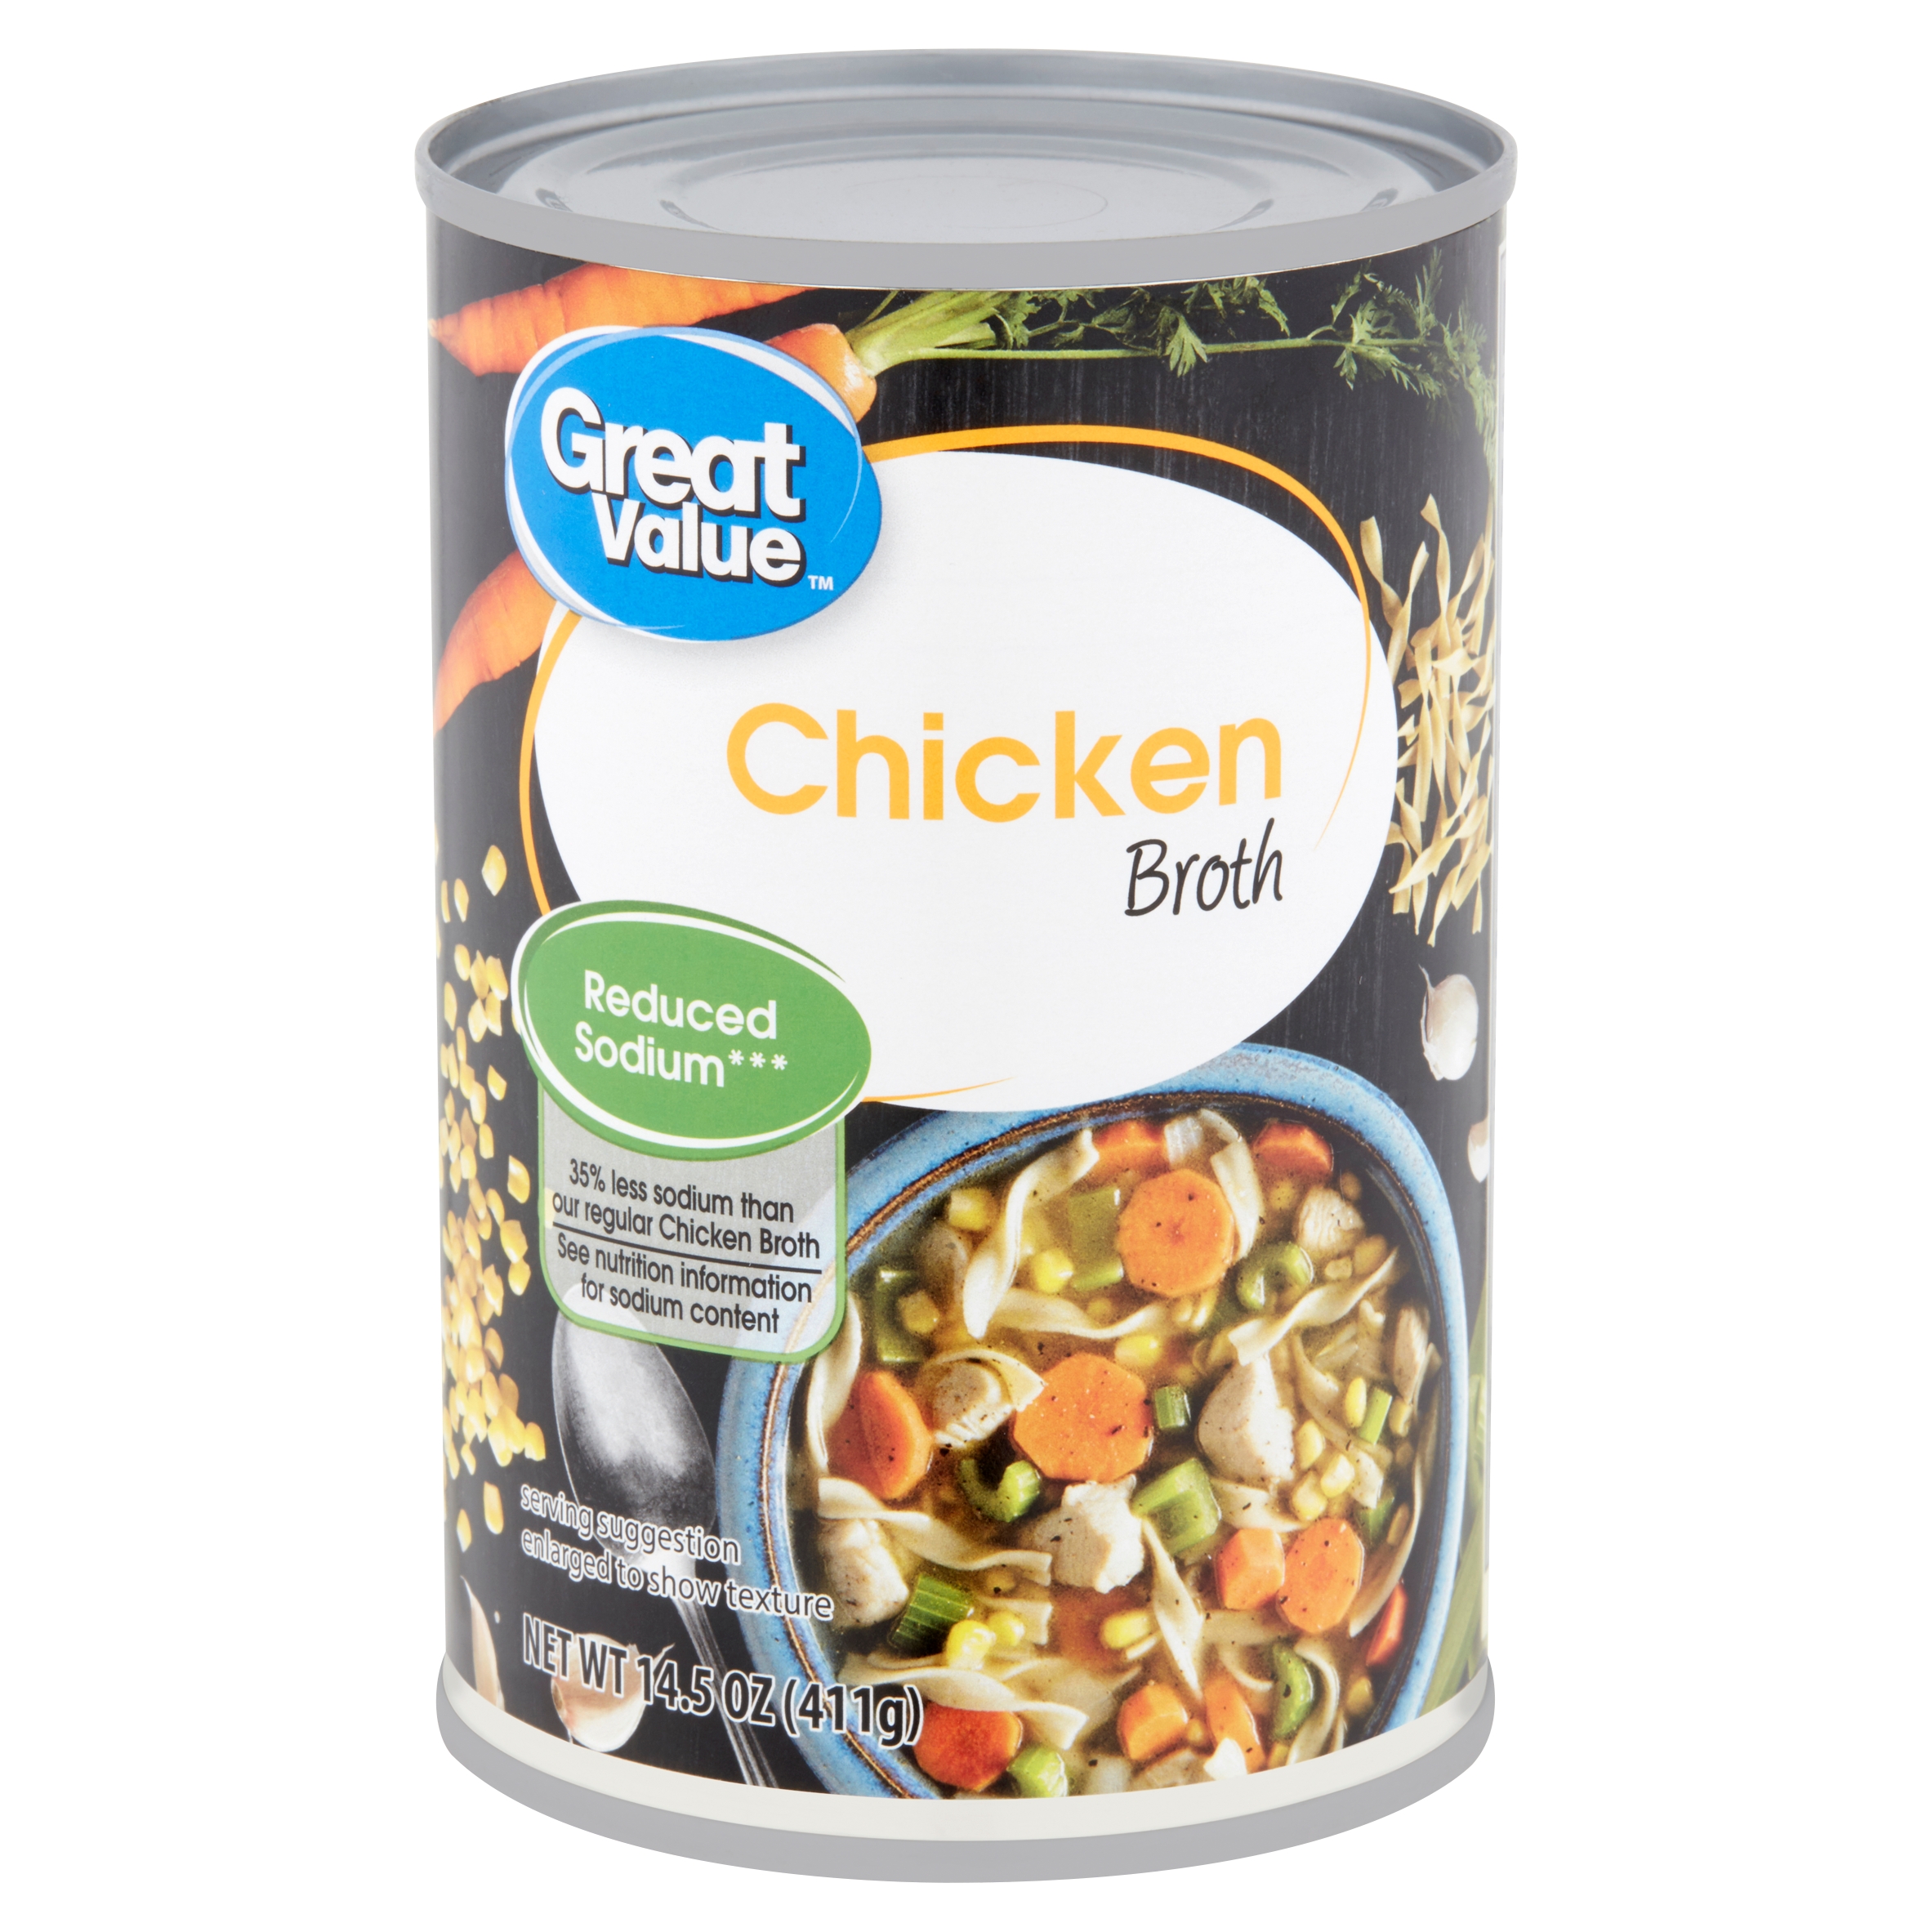 Great Value Reduced Sodium Chicken Broth, 14.5 Oz Image